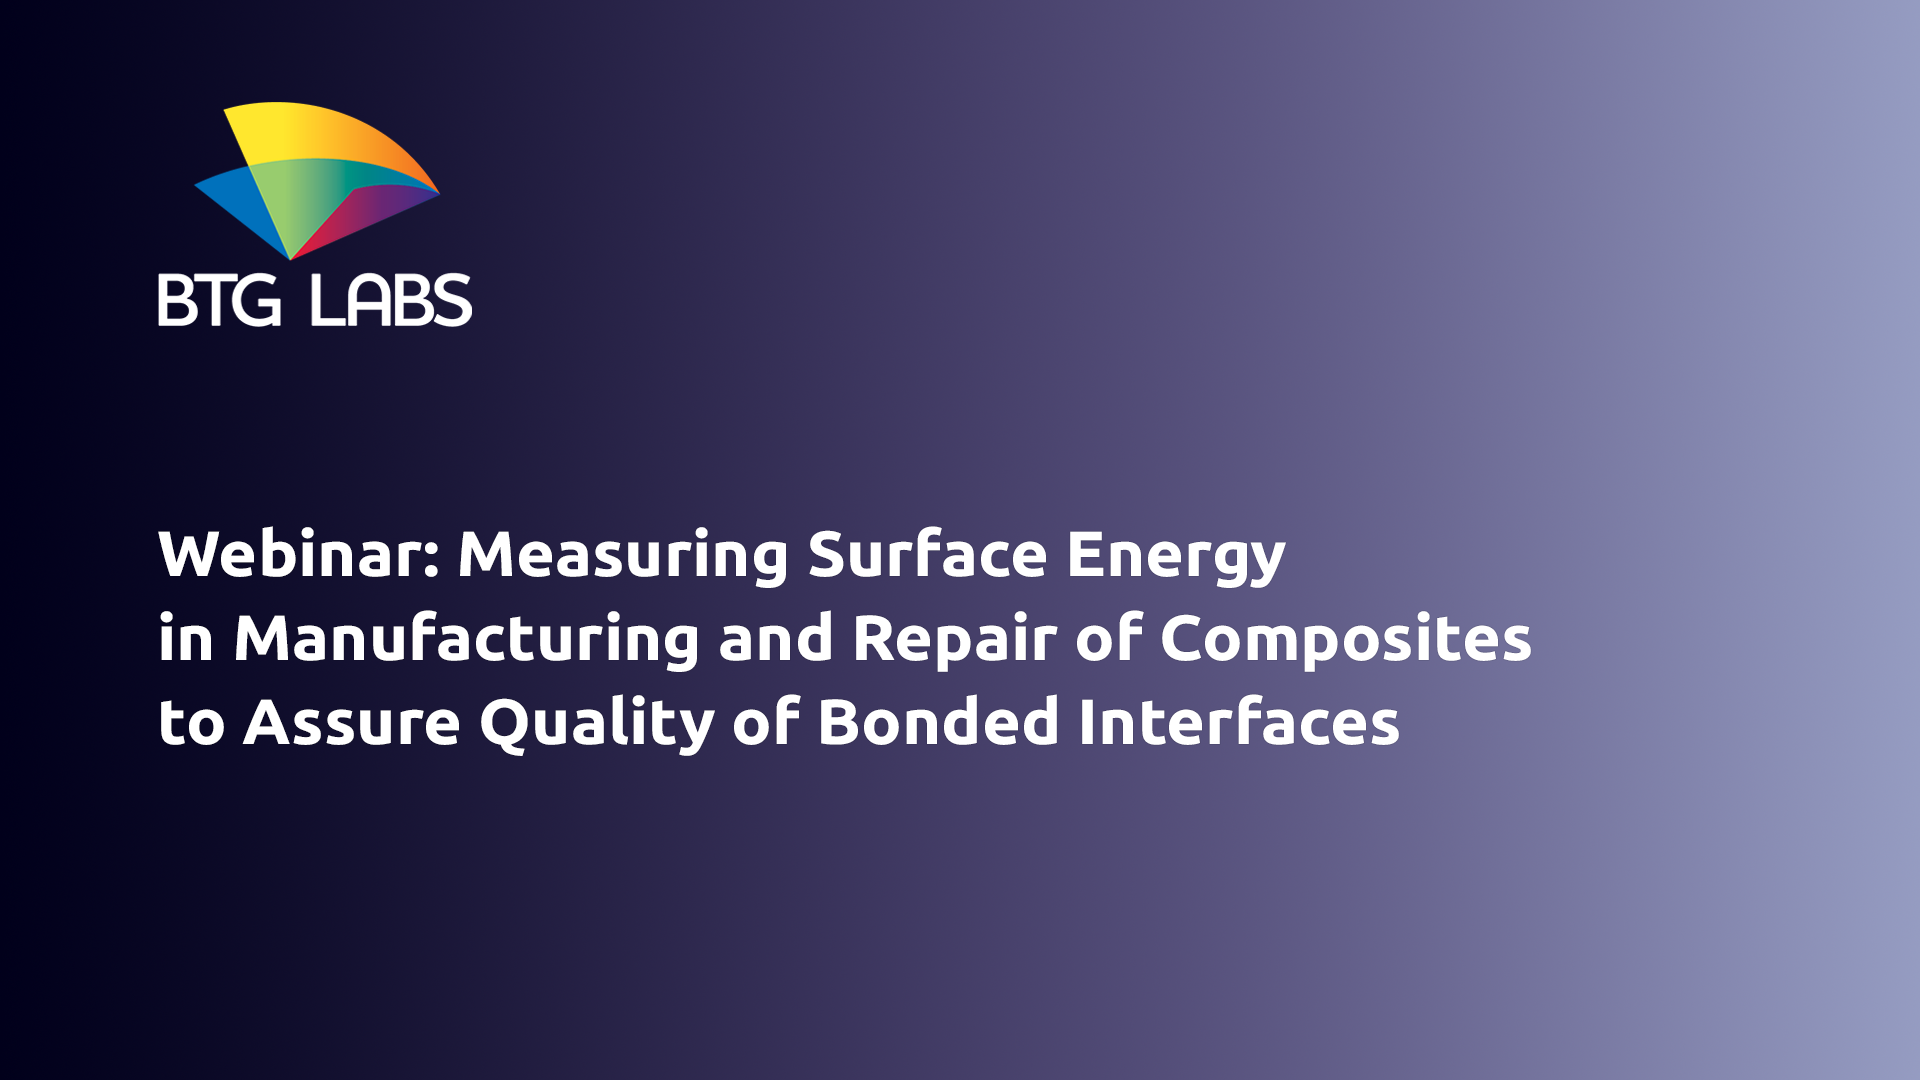 CompositesWorld Magazine, BTG Labs & Abaris Hosting Surface Energy and Quality Assurance Webinar